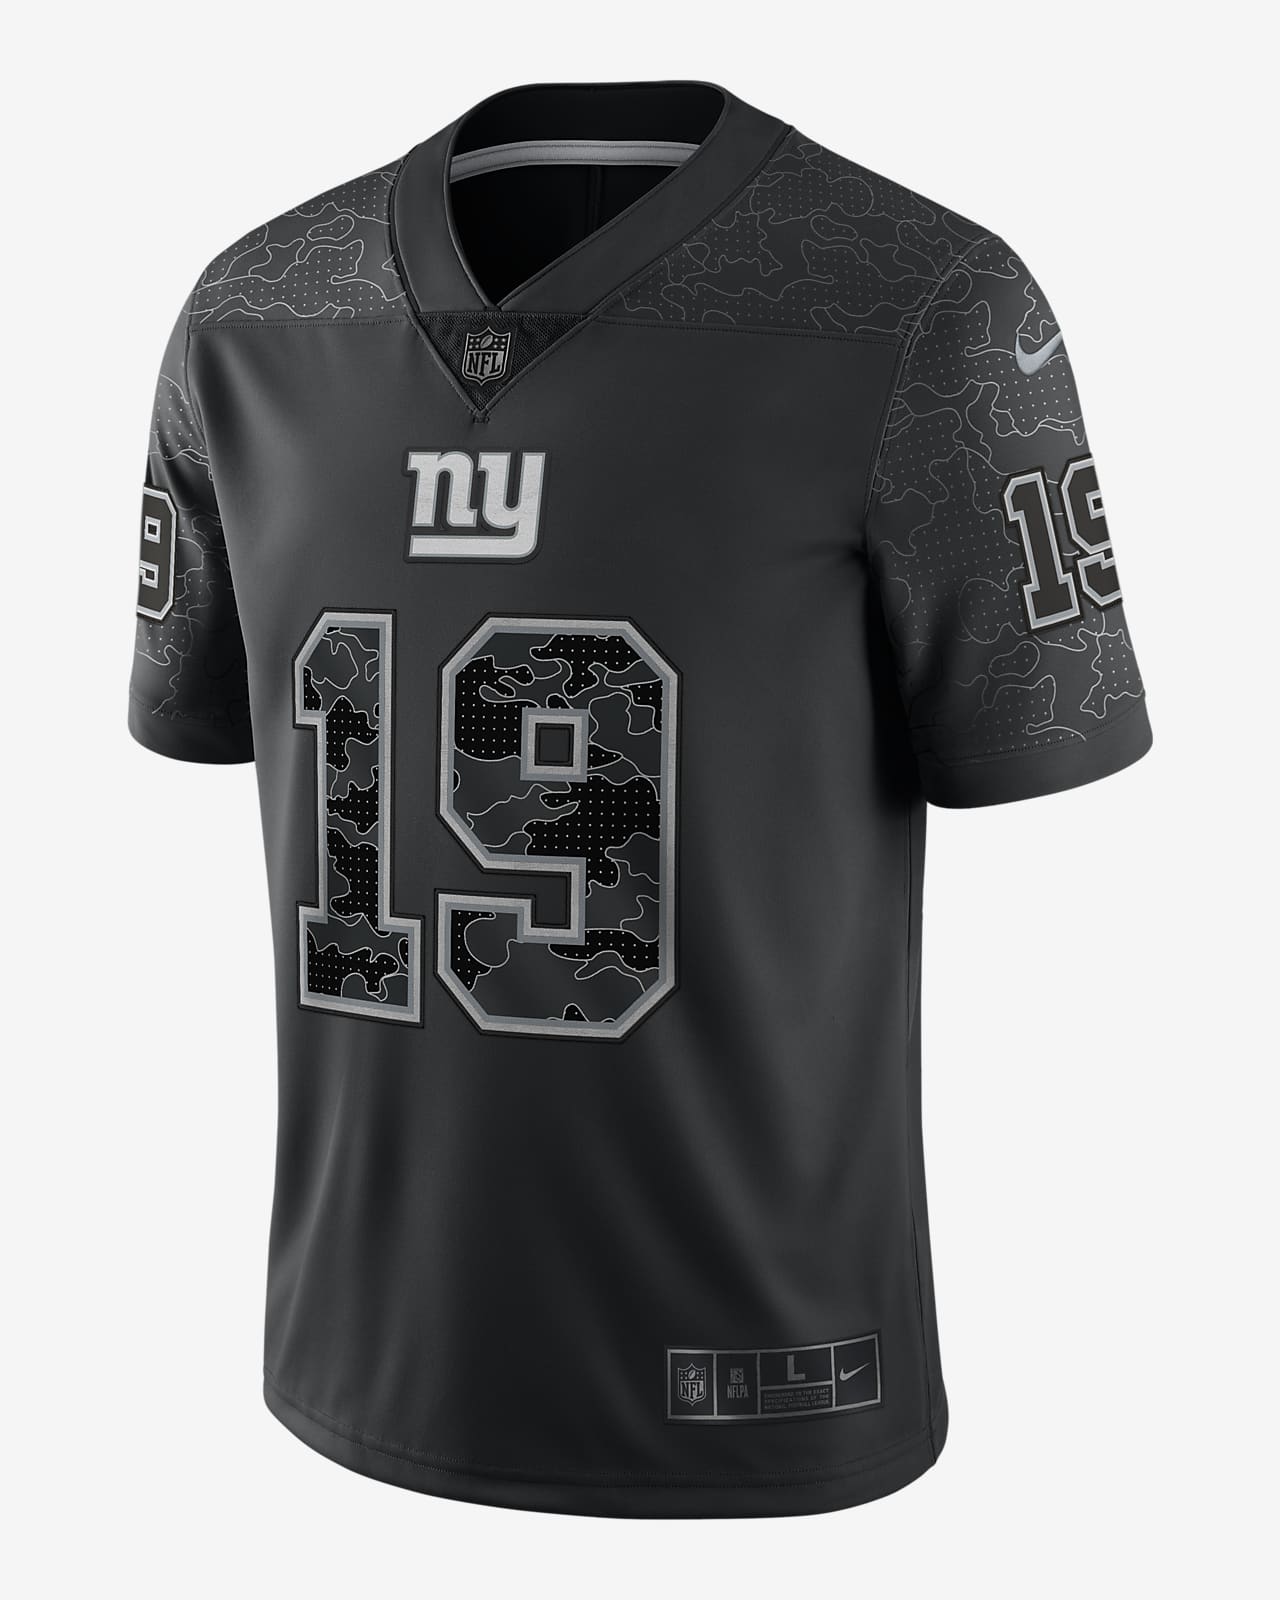 NFL New York Giants RFLCTV (Kenny Golladay) Men's Fashion Football Jersey